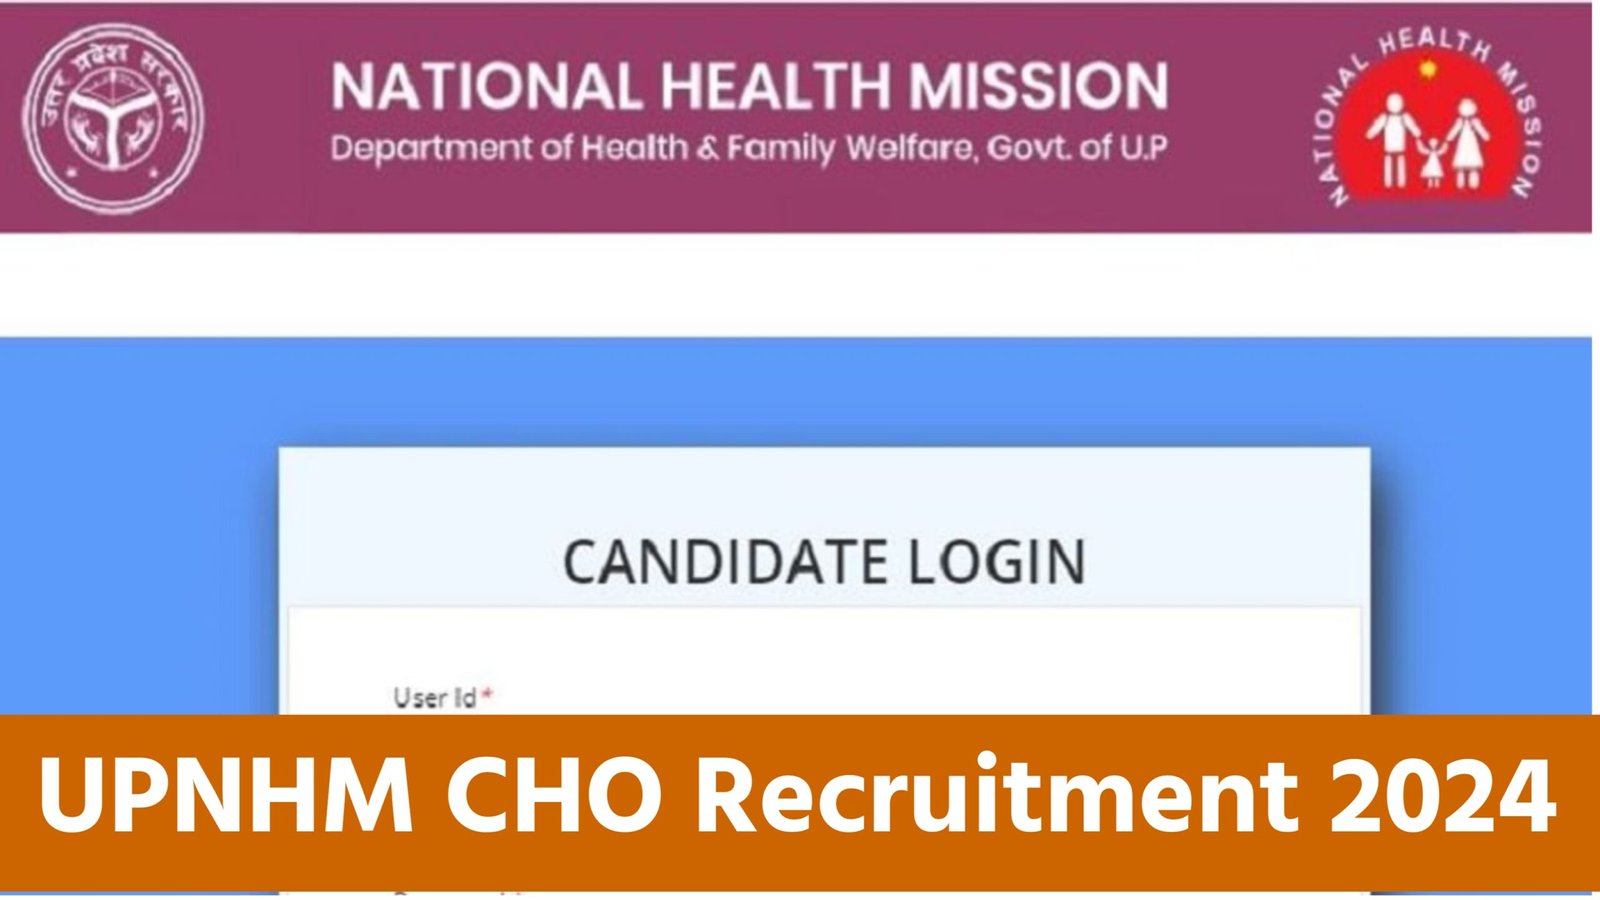 UPNHM CHO Recruitment 2024